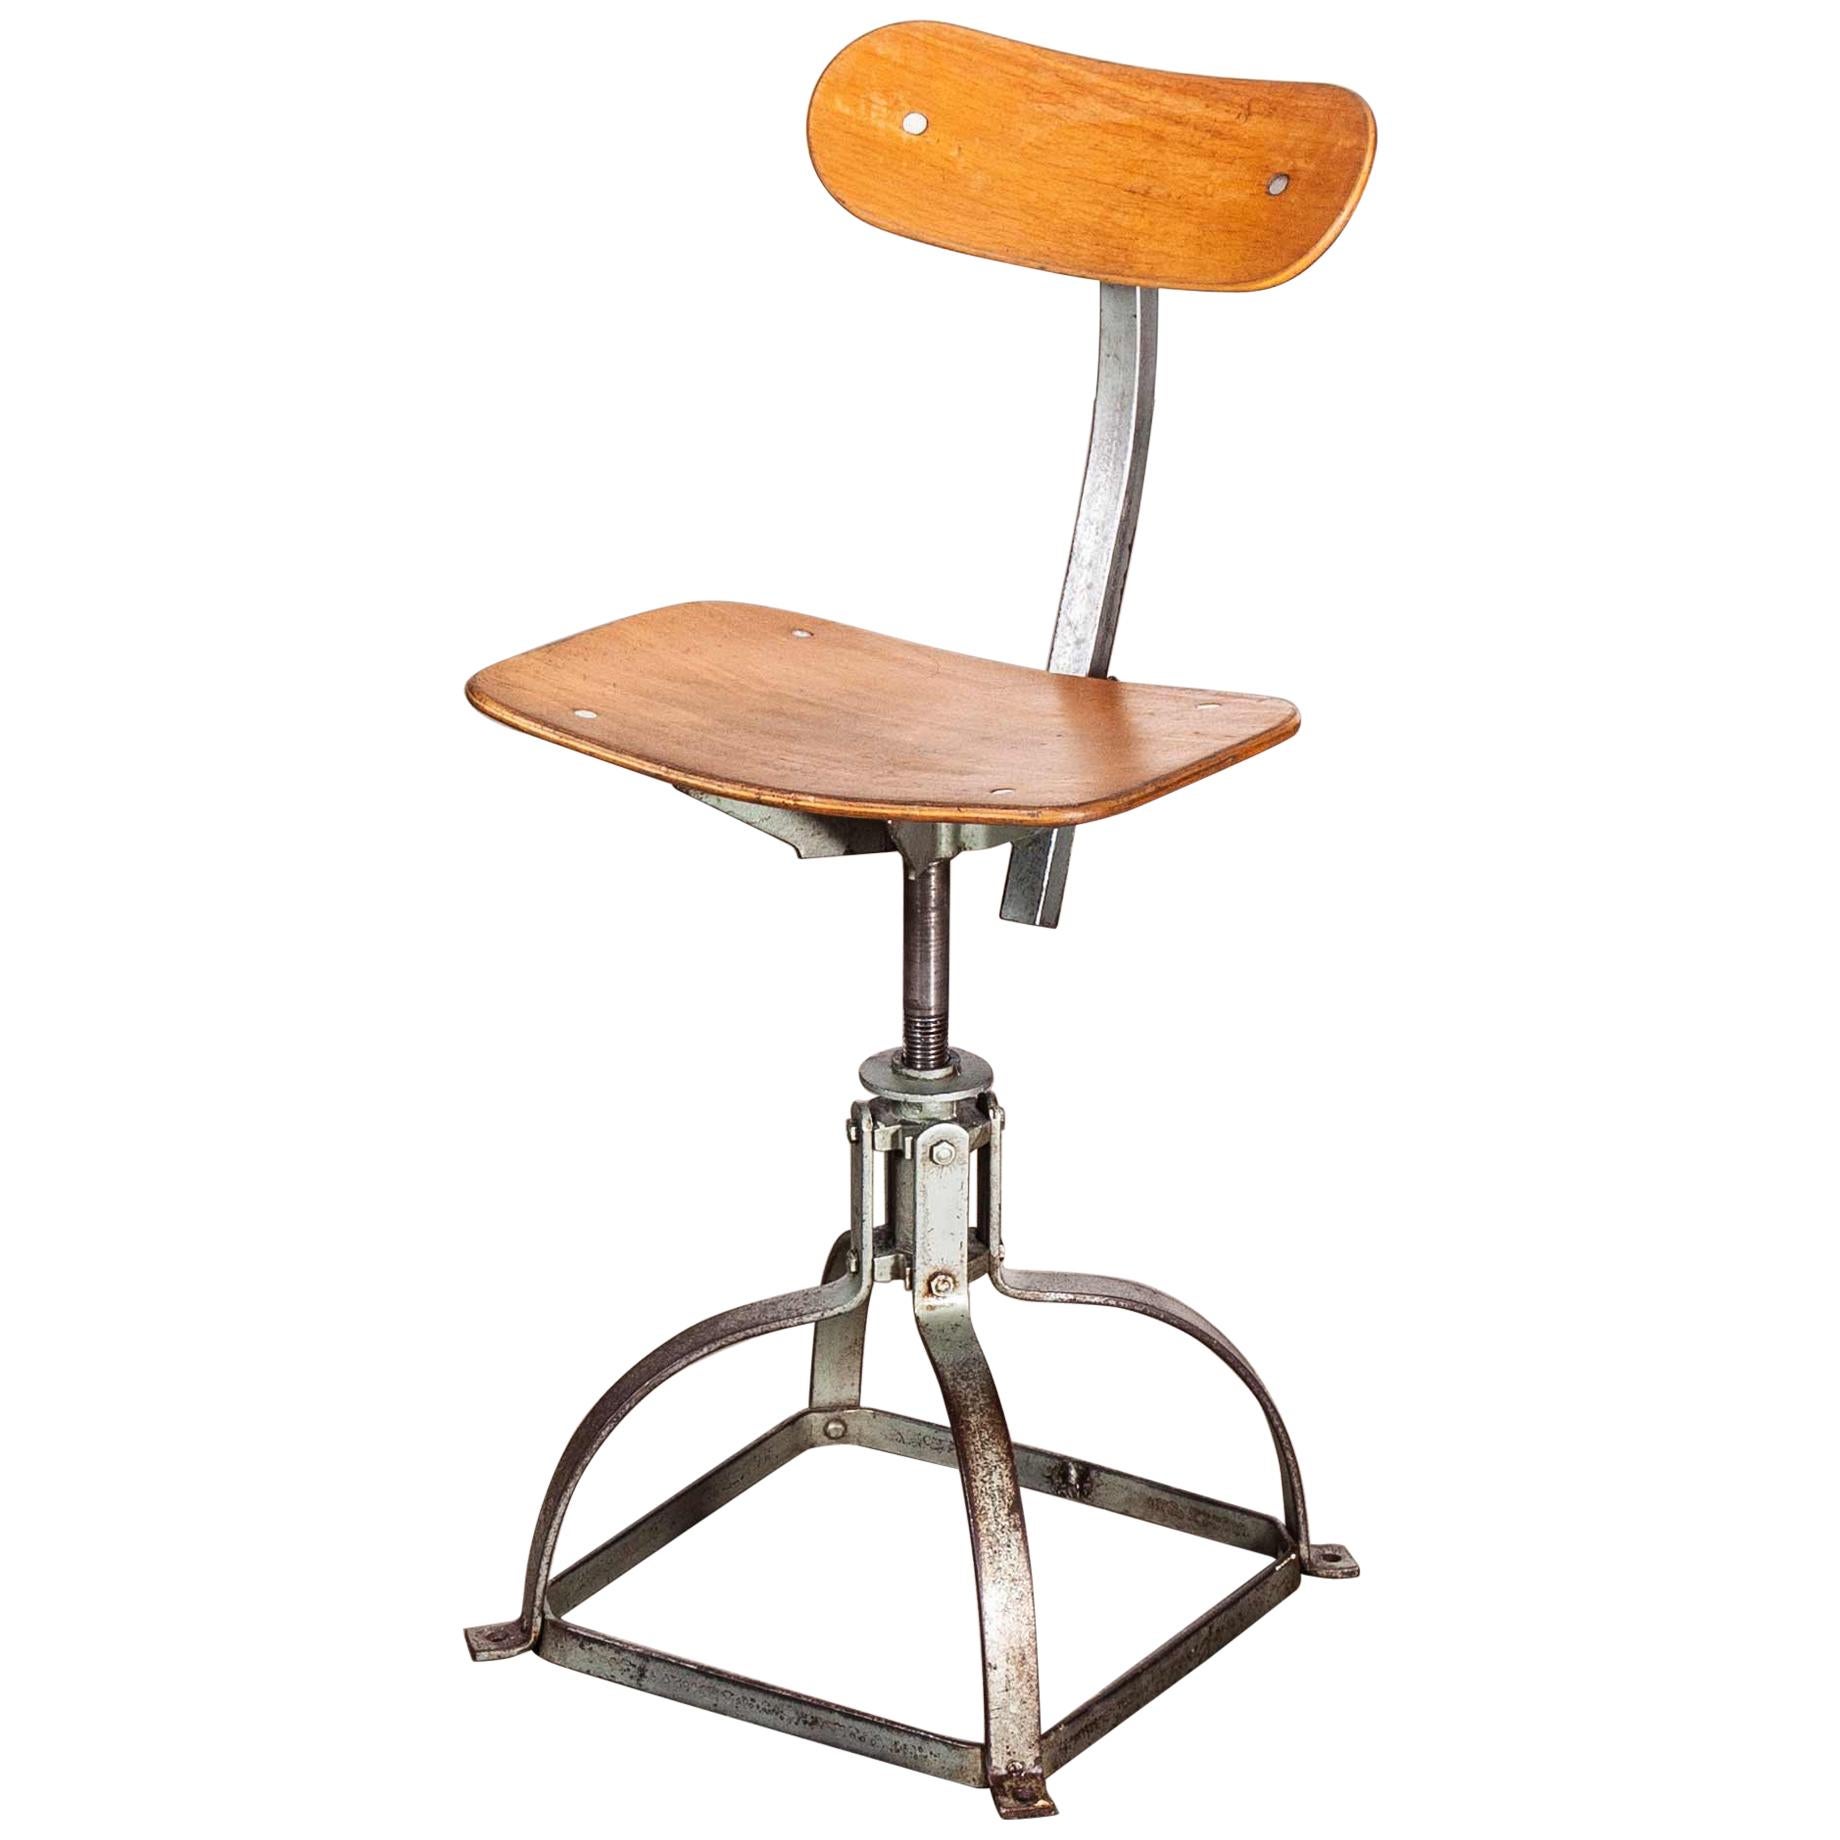 1950s Original French Bienaise Swivelling Workshop Chair, Low Desk Chair